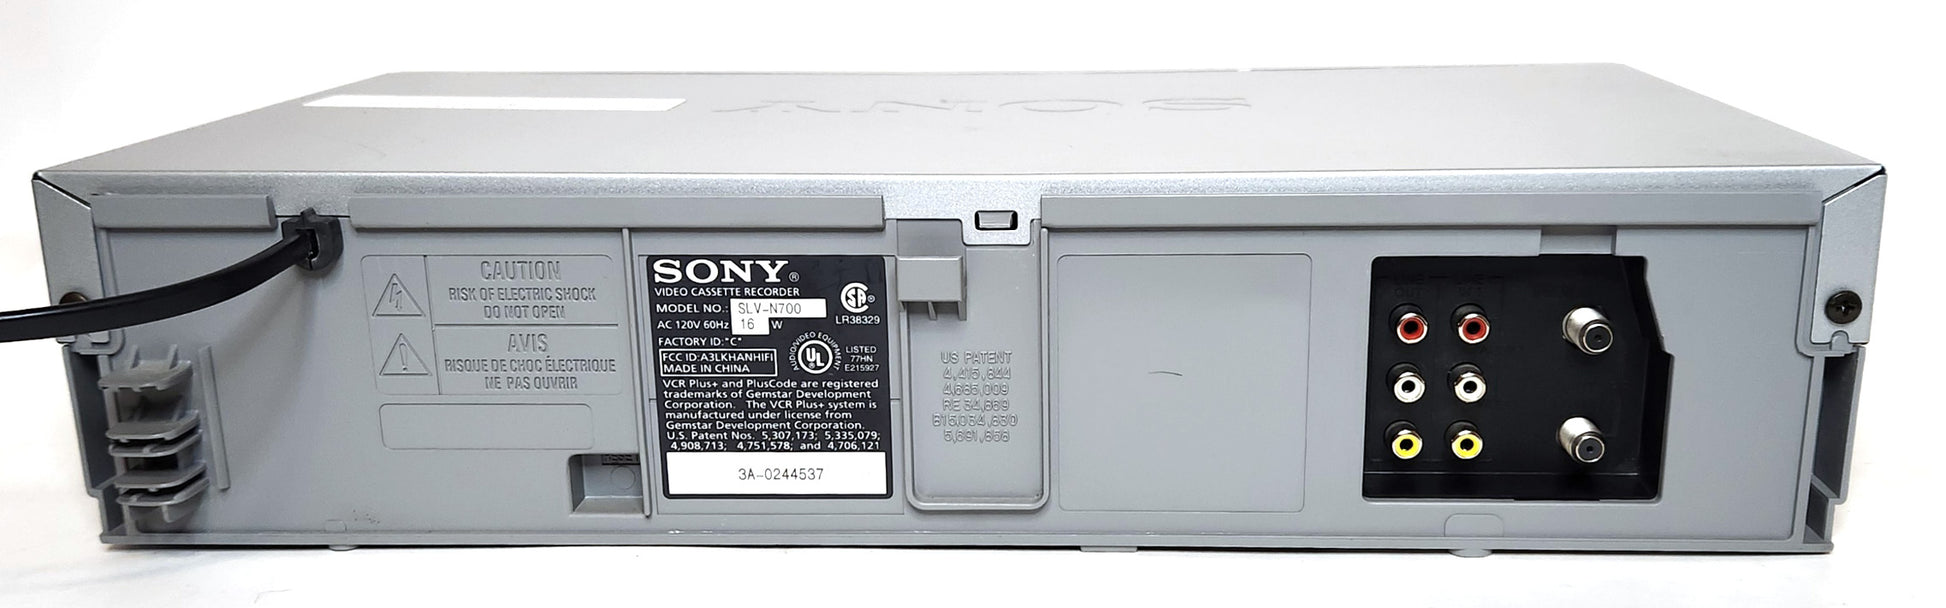 Sony SLV-N700 VCR, 4-Head Hi-Fi Stereo - Rear